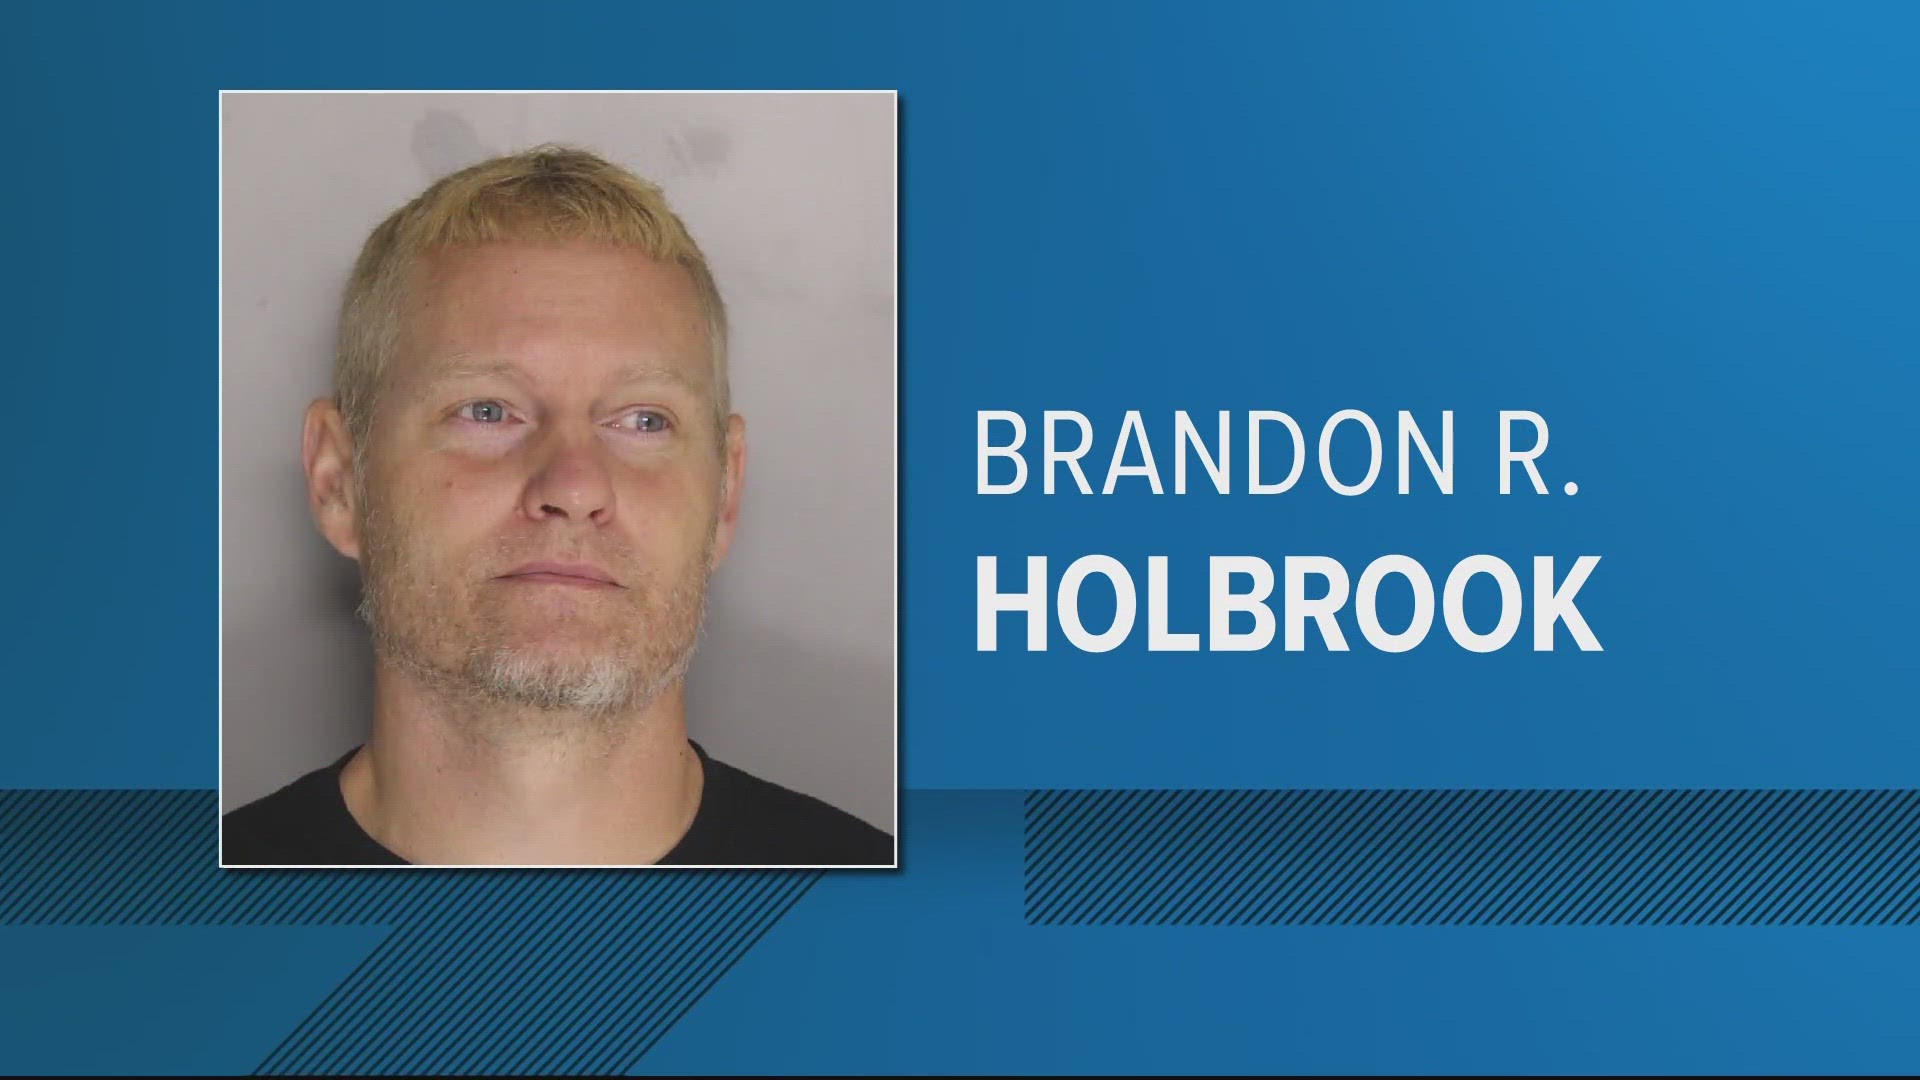 Brandon Holbrook was charged with Shymanski's murder on September 6